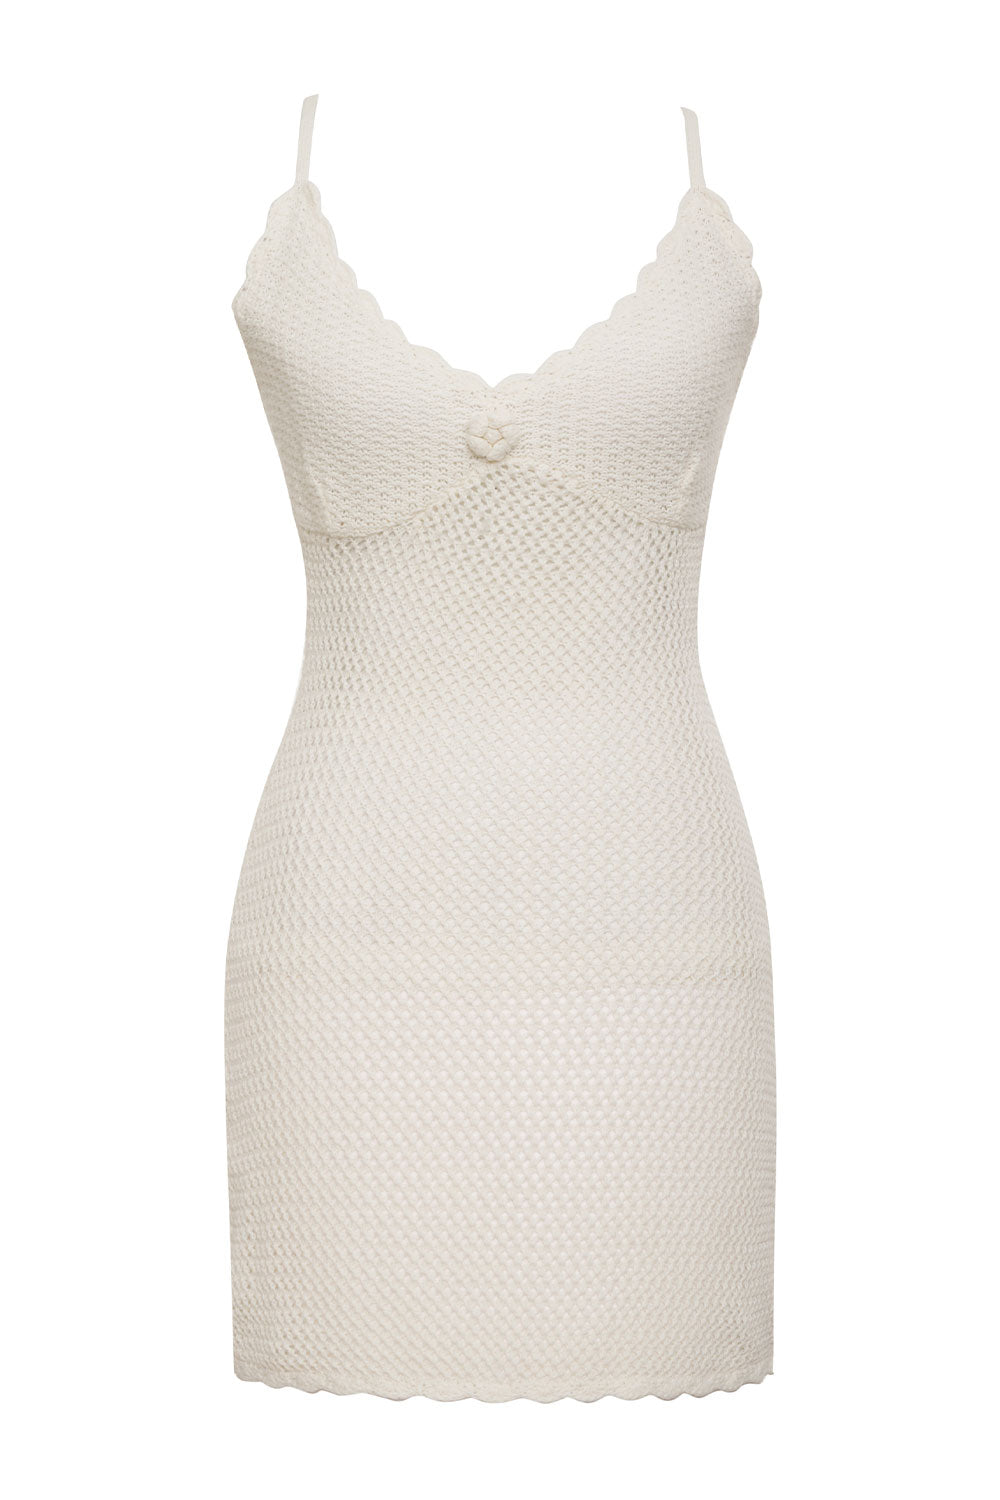 Collette Crochet Mini Dress - White